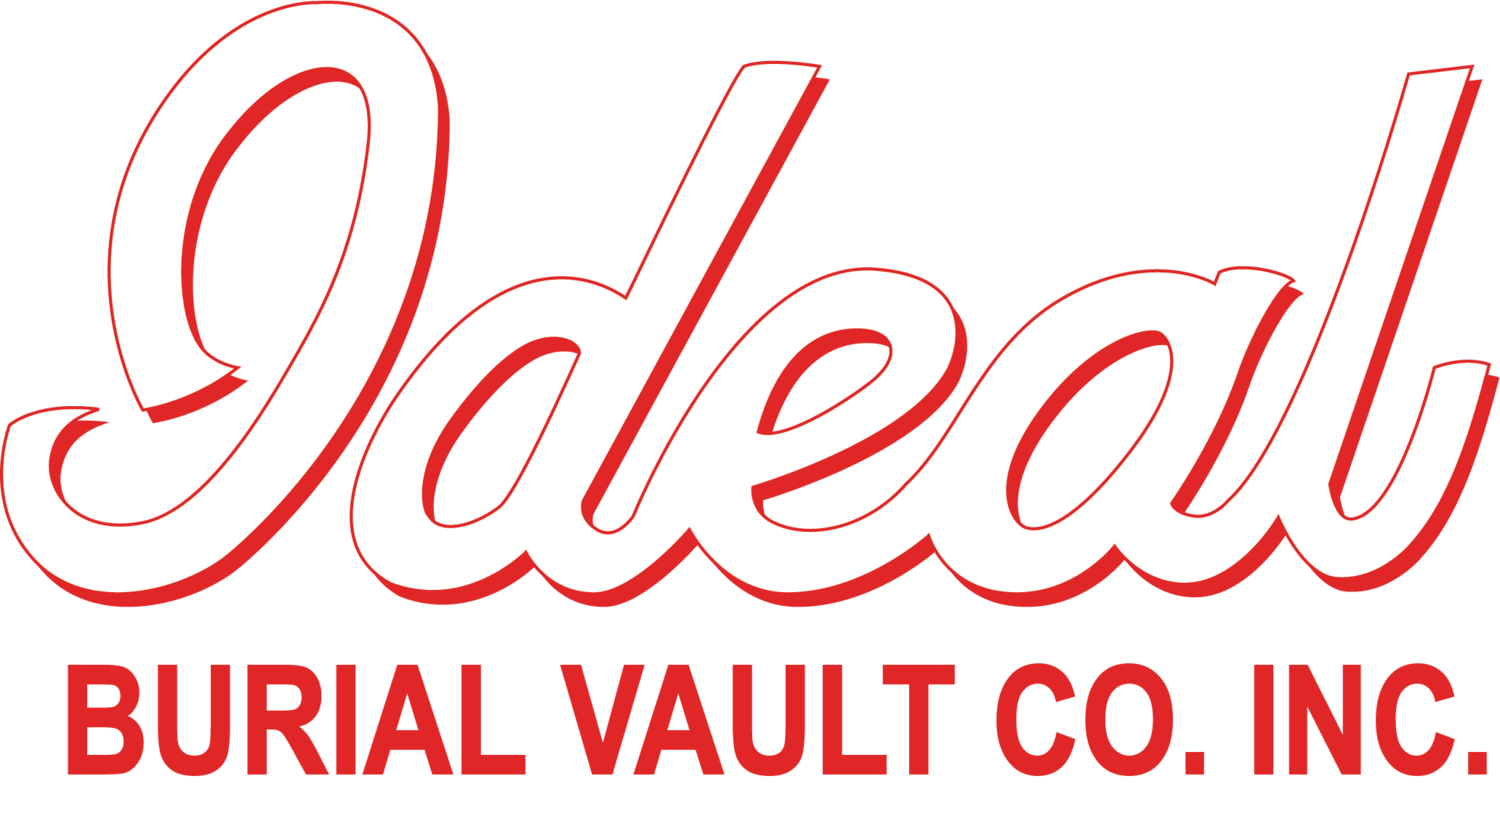 Ideal Burial Vault Co., Inc.